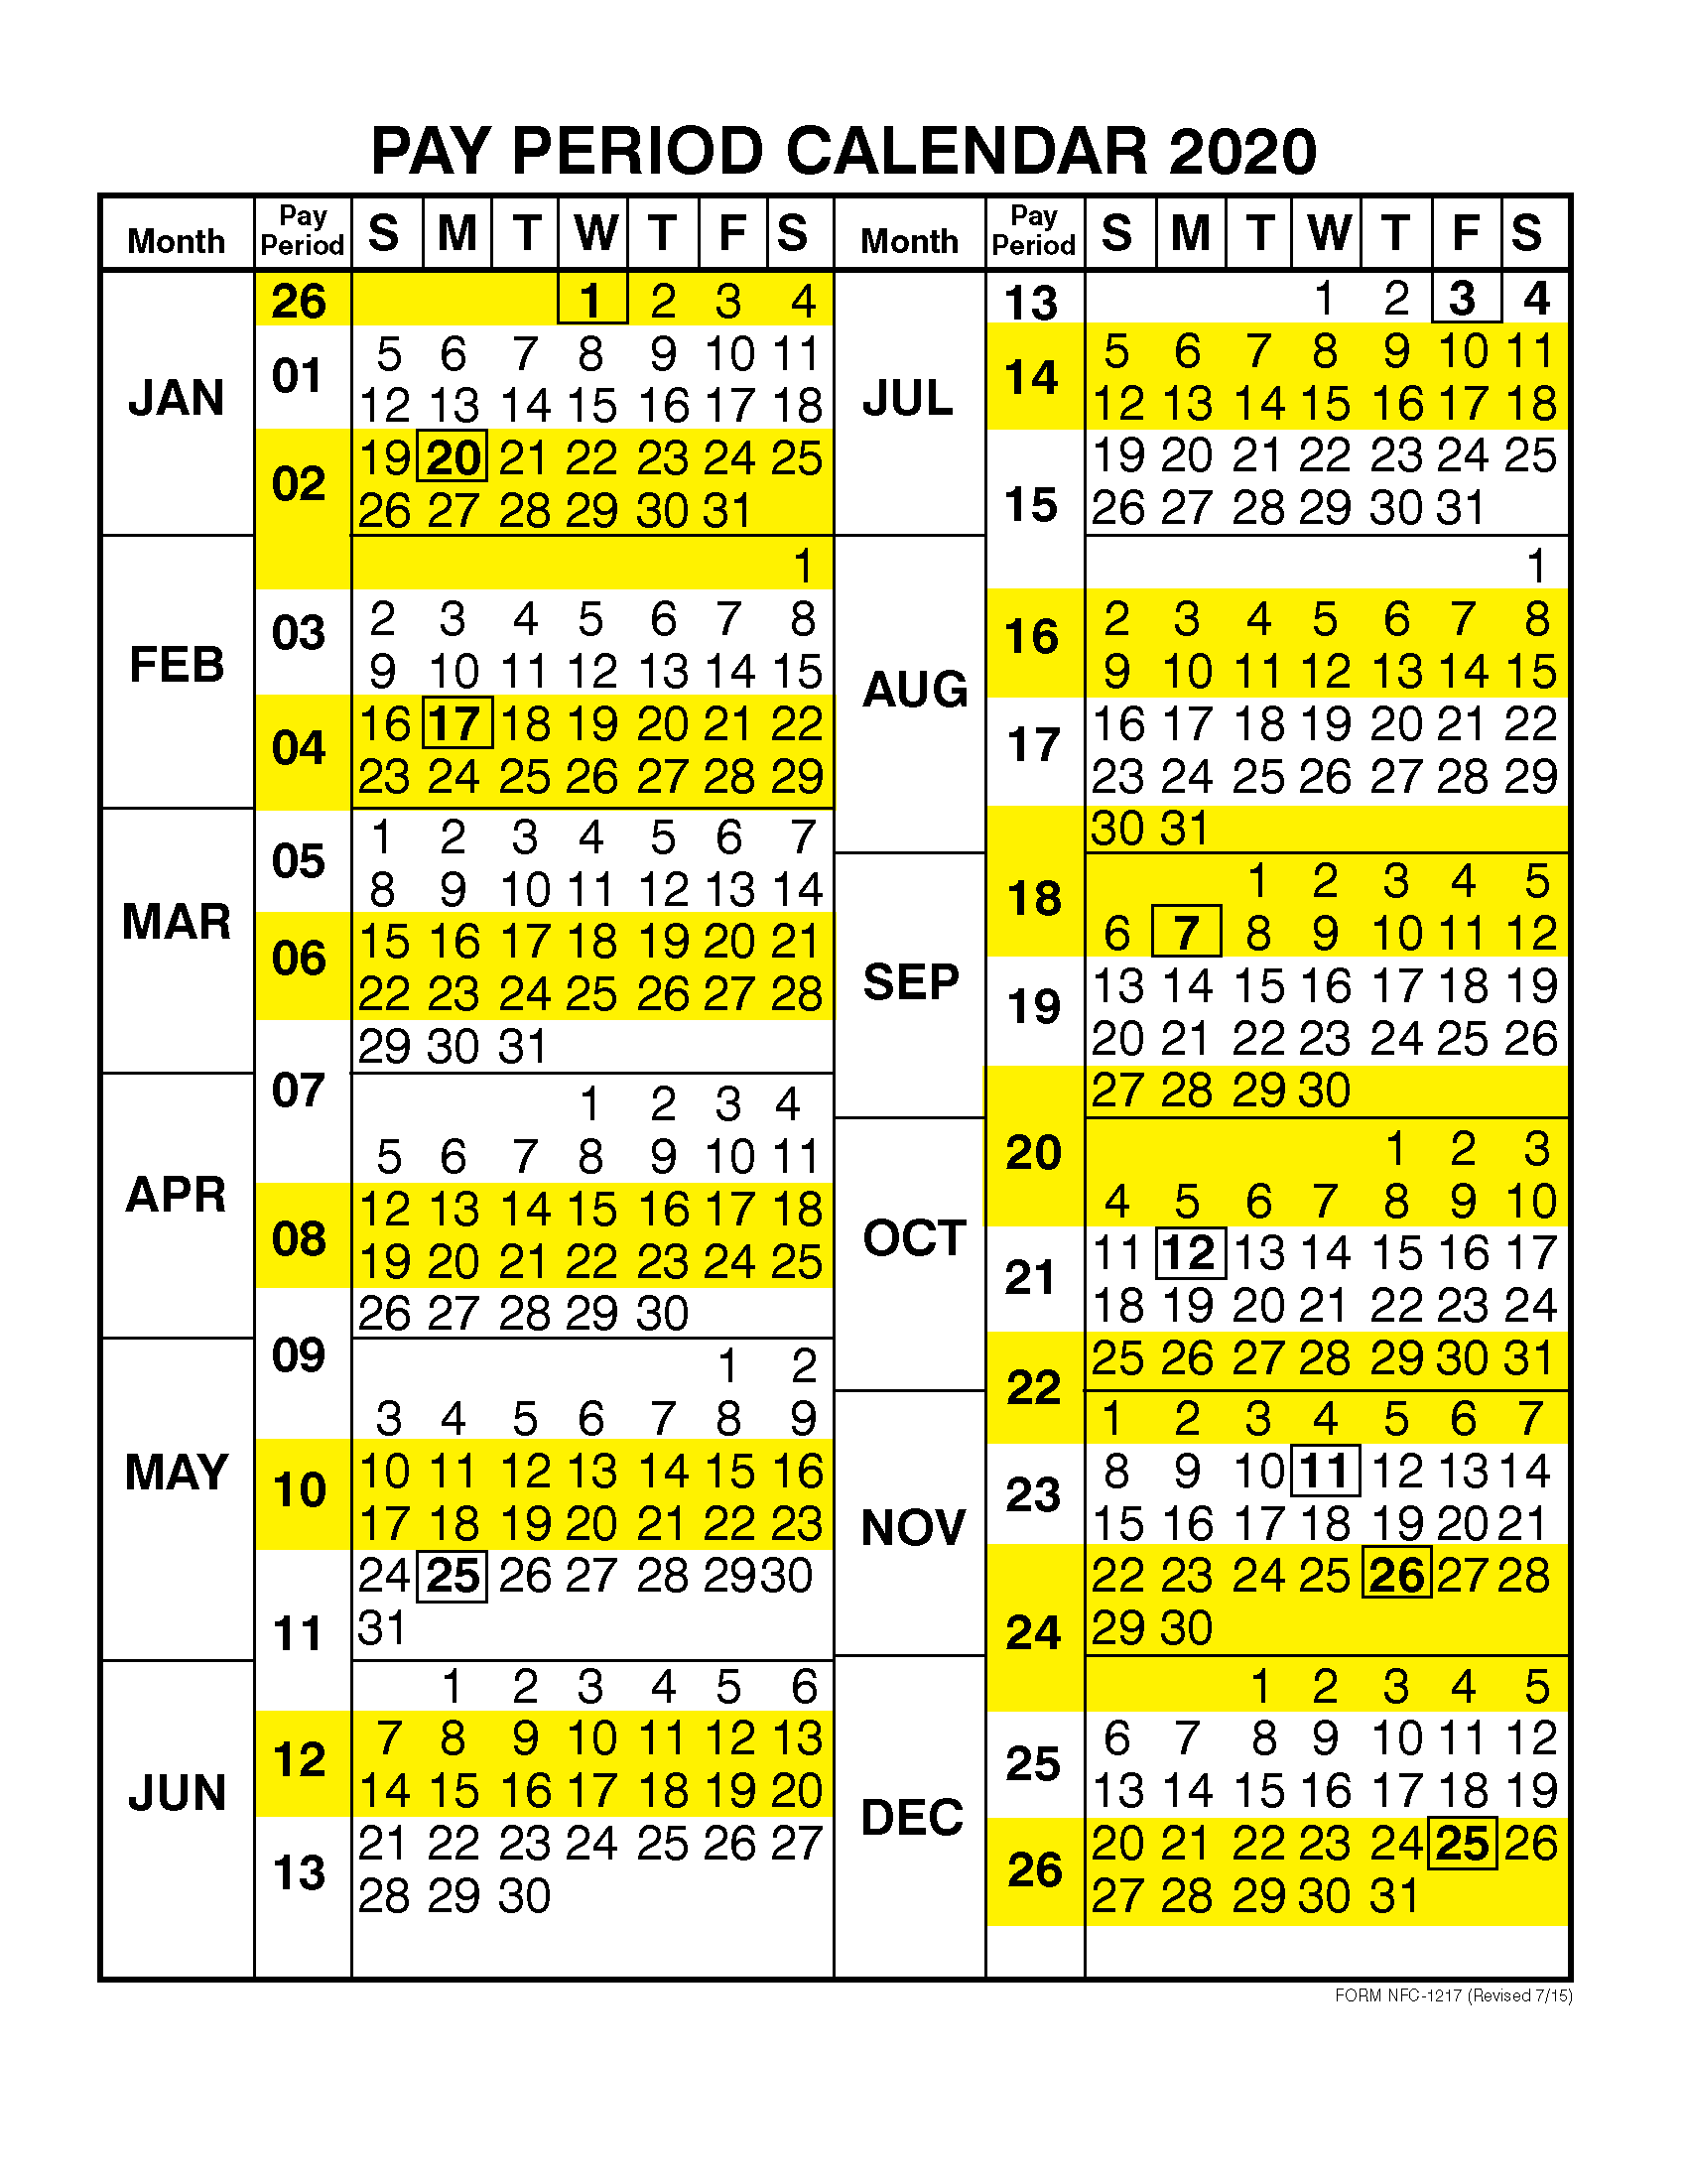 2021 pay calendar opm Pay Period Calendar 2020 By Calendar Year Free Printable 2020 Monthly Calendar With Holidays 2021 pay calendar opm